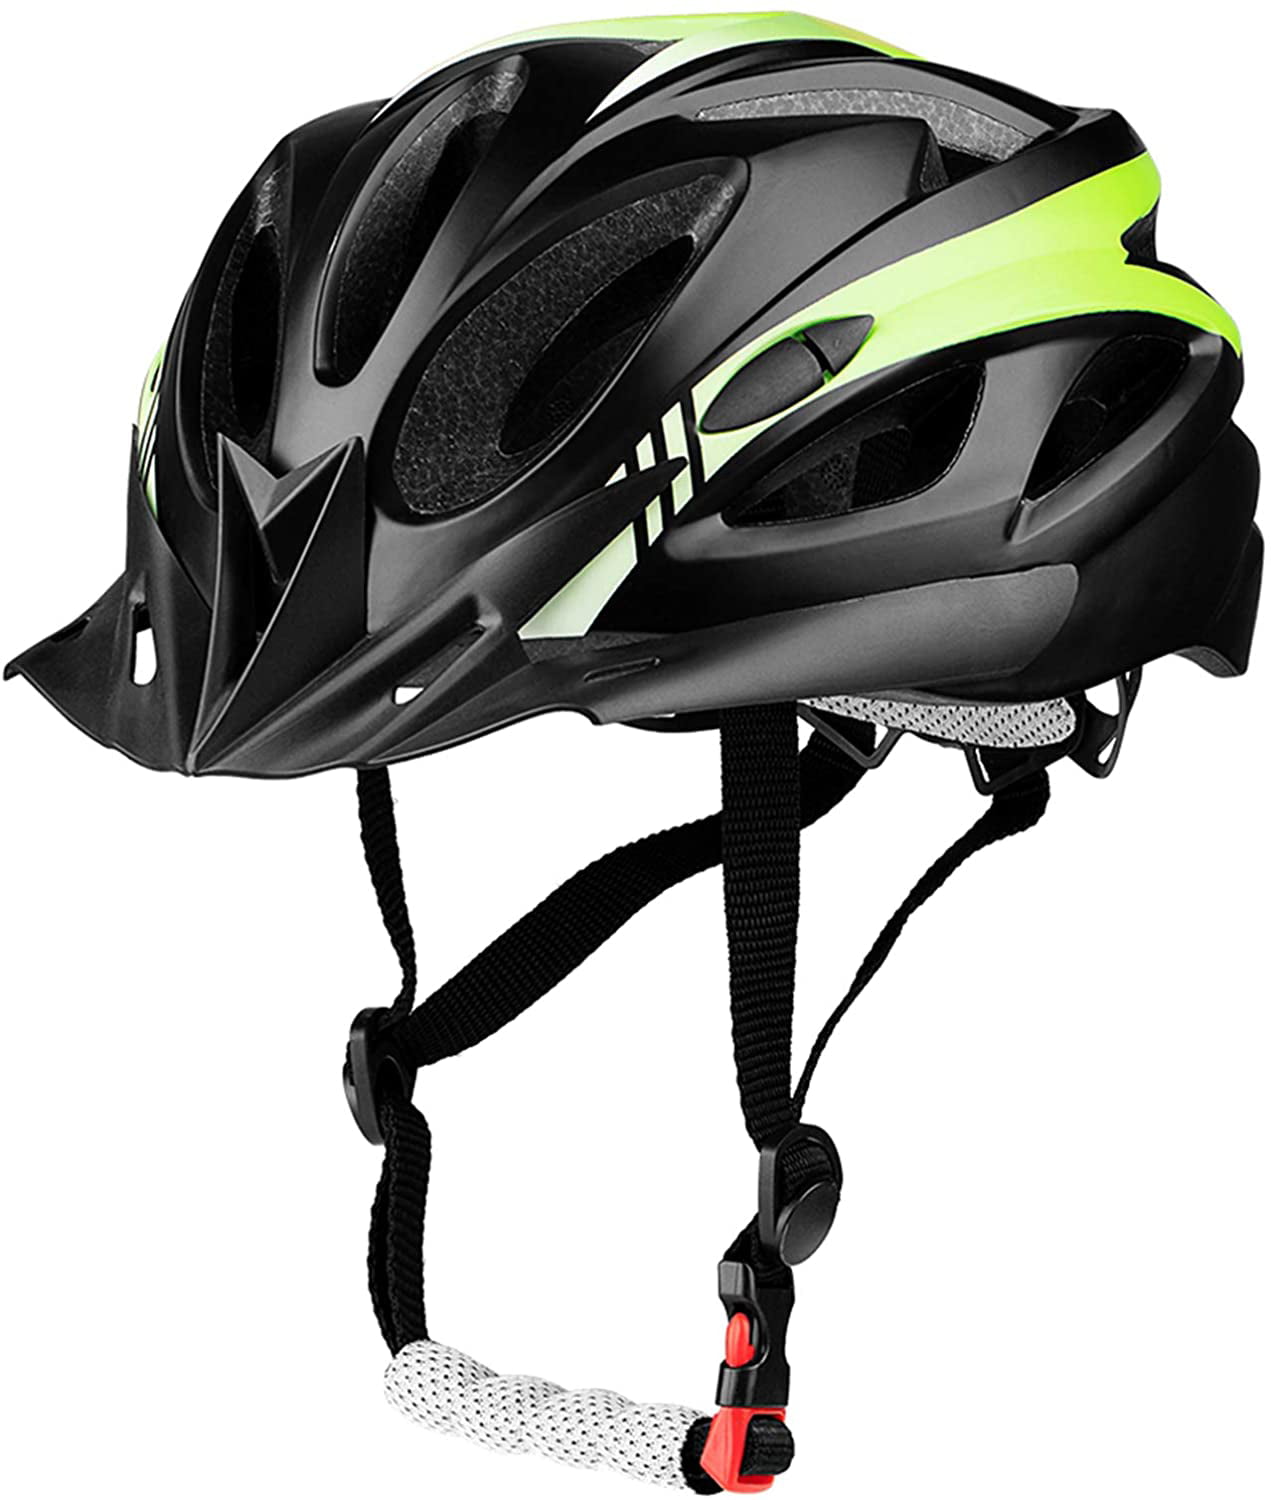 Details about   Bicycle Helmets Bike Cycling Back Light Adult Unisex Road Safety Helmet & Visor 